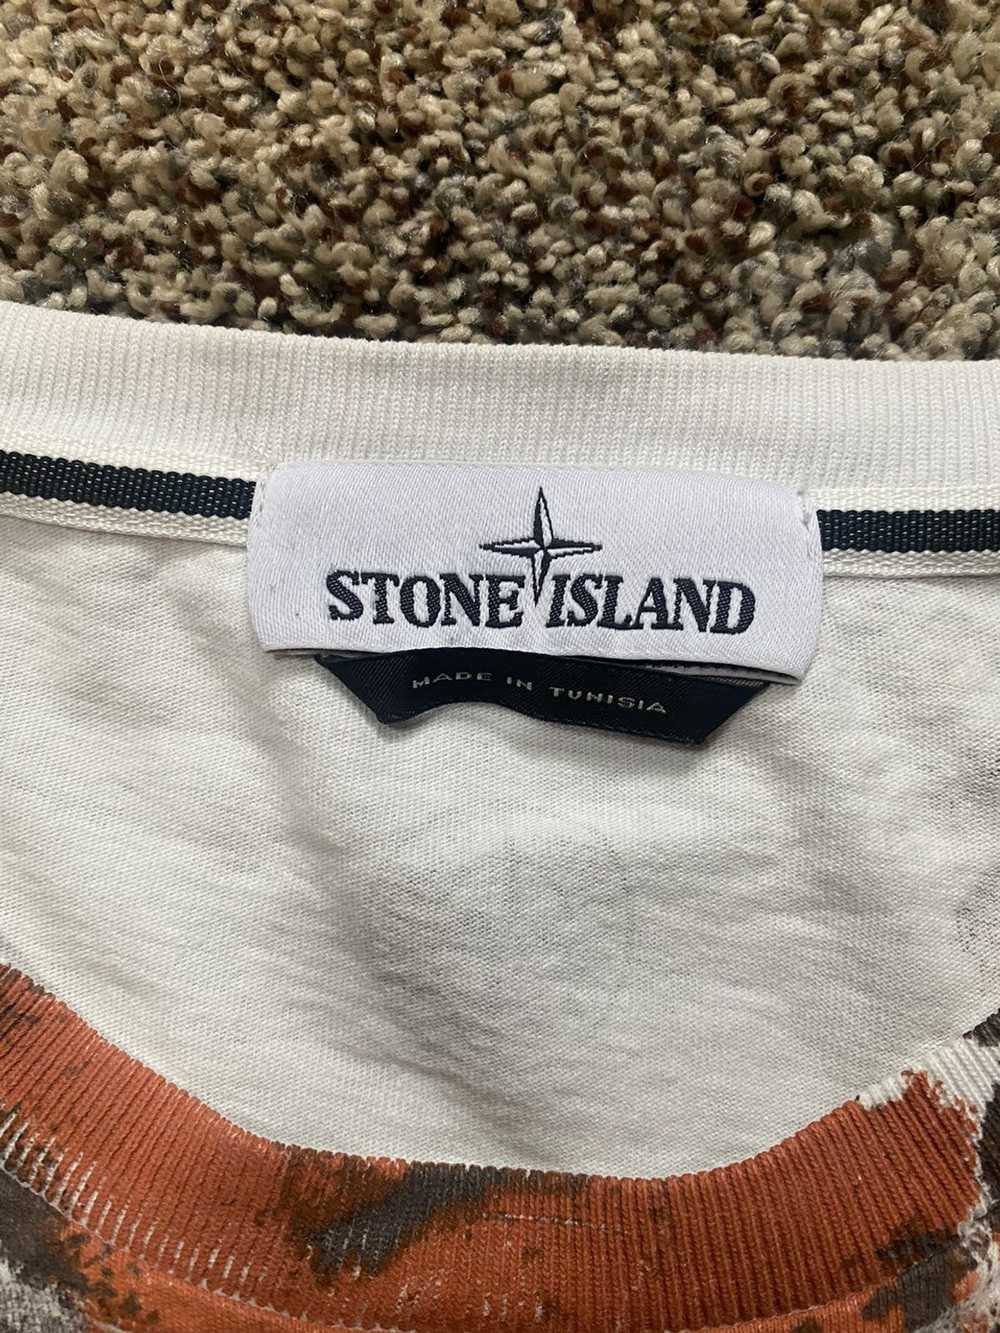 Stone Island Stone Island Tee - image 3